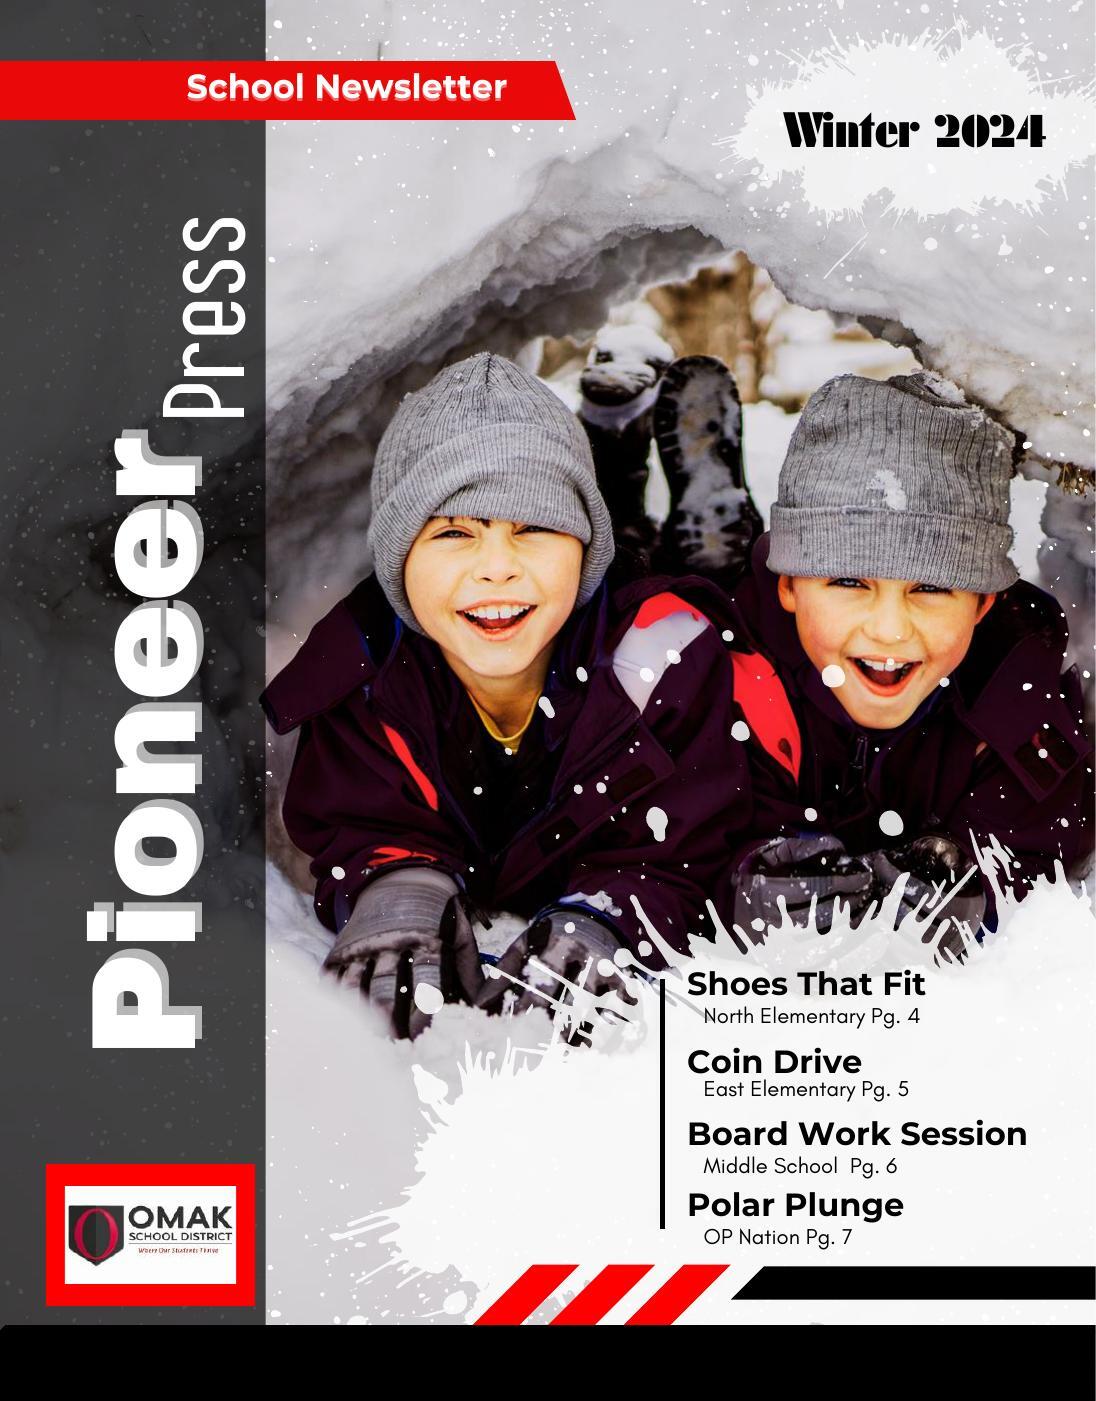 Pioneer Press Winter 2024 Newsletter thumbnail (English)